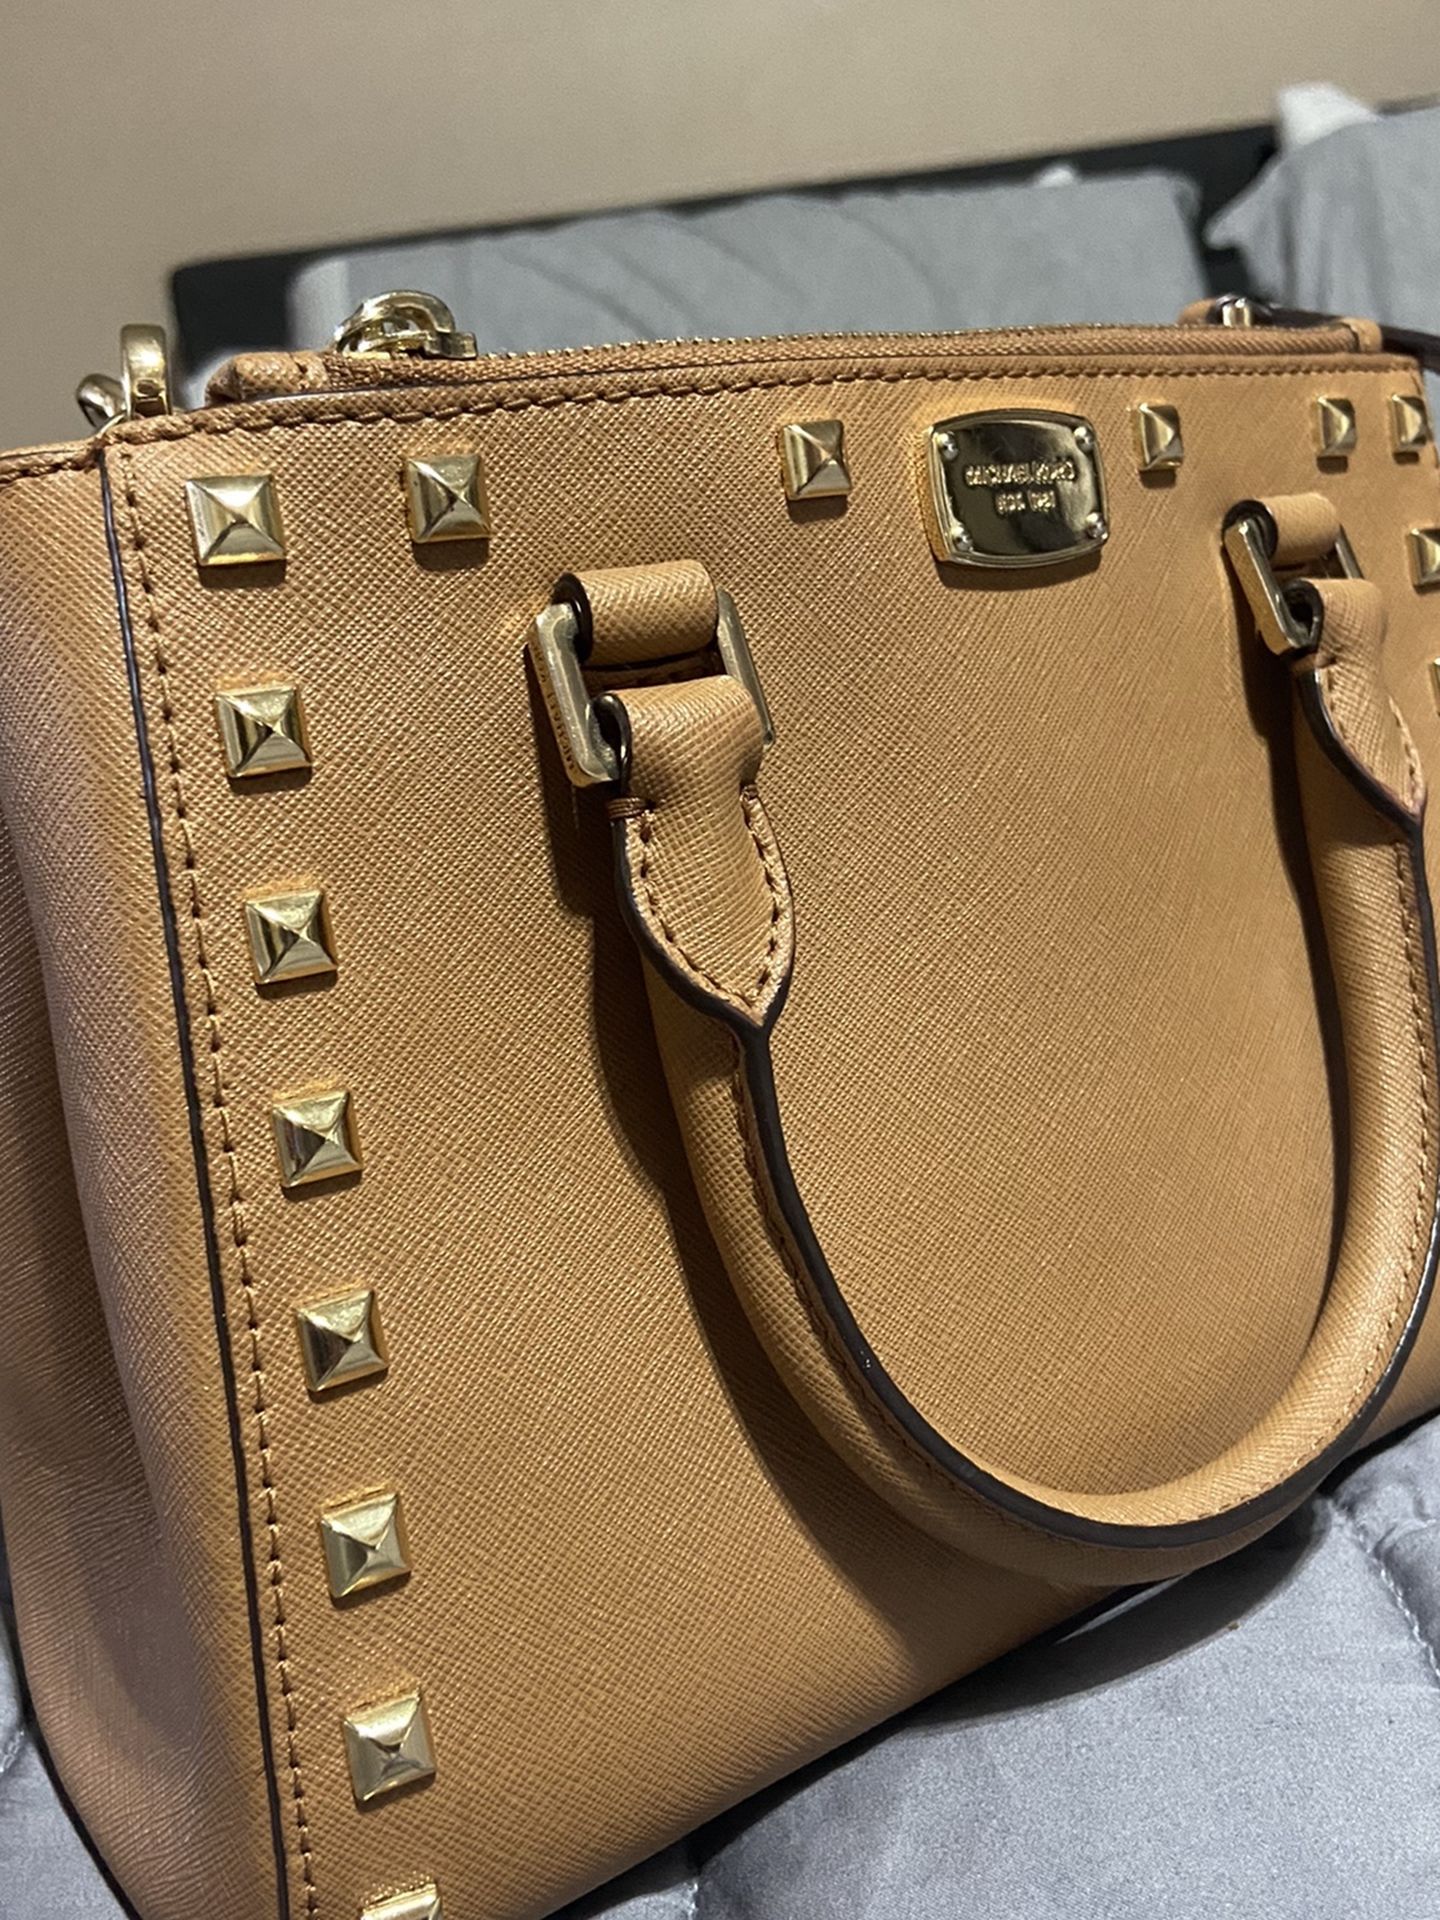 Mk purse